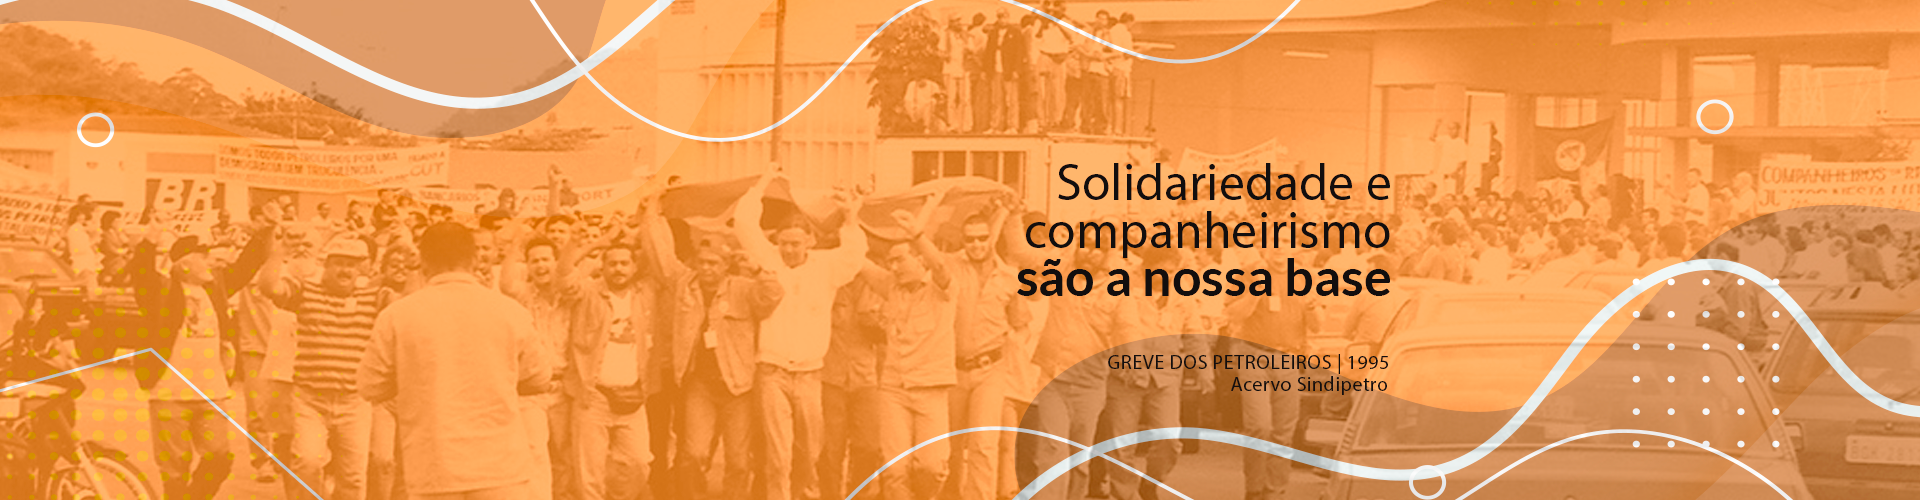 Banner Solidariedade